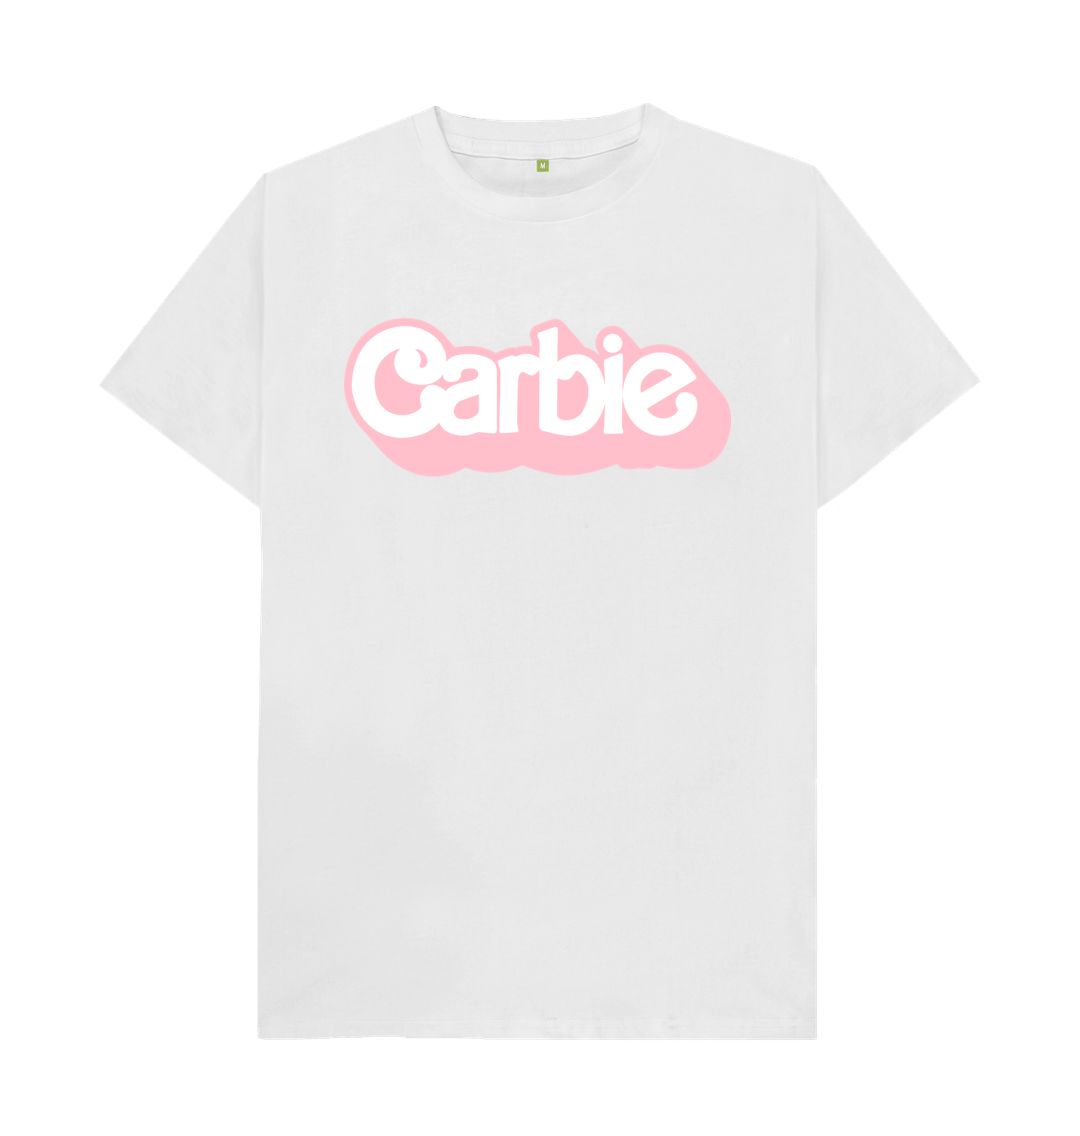 White Carbie